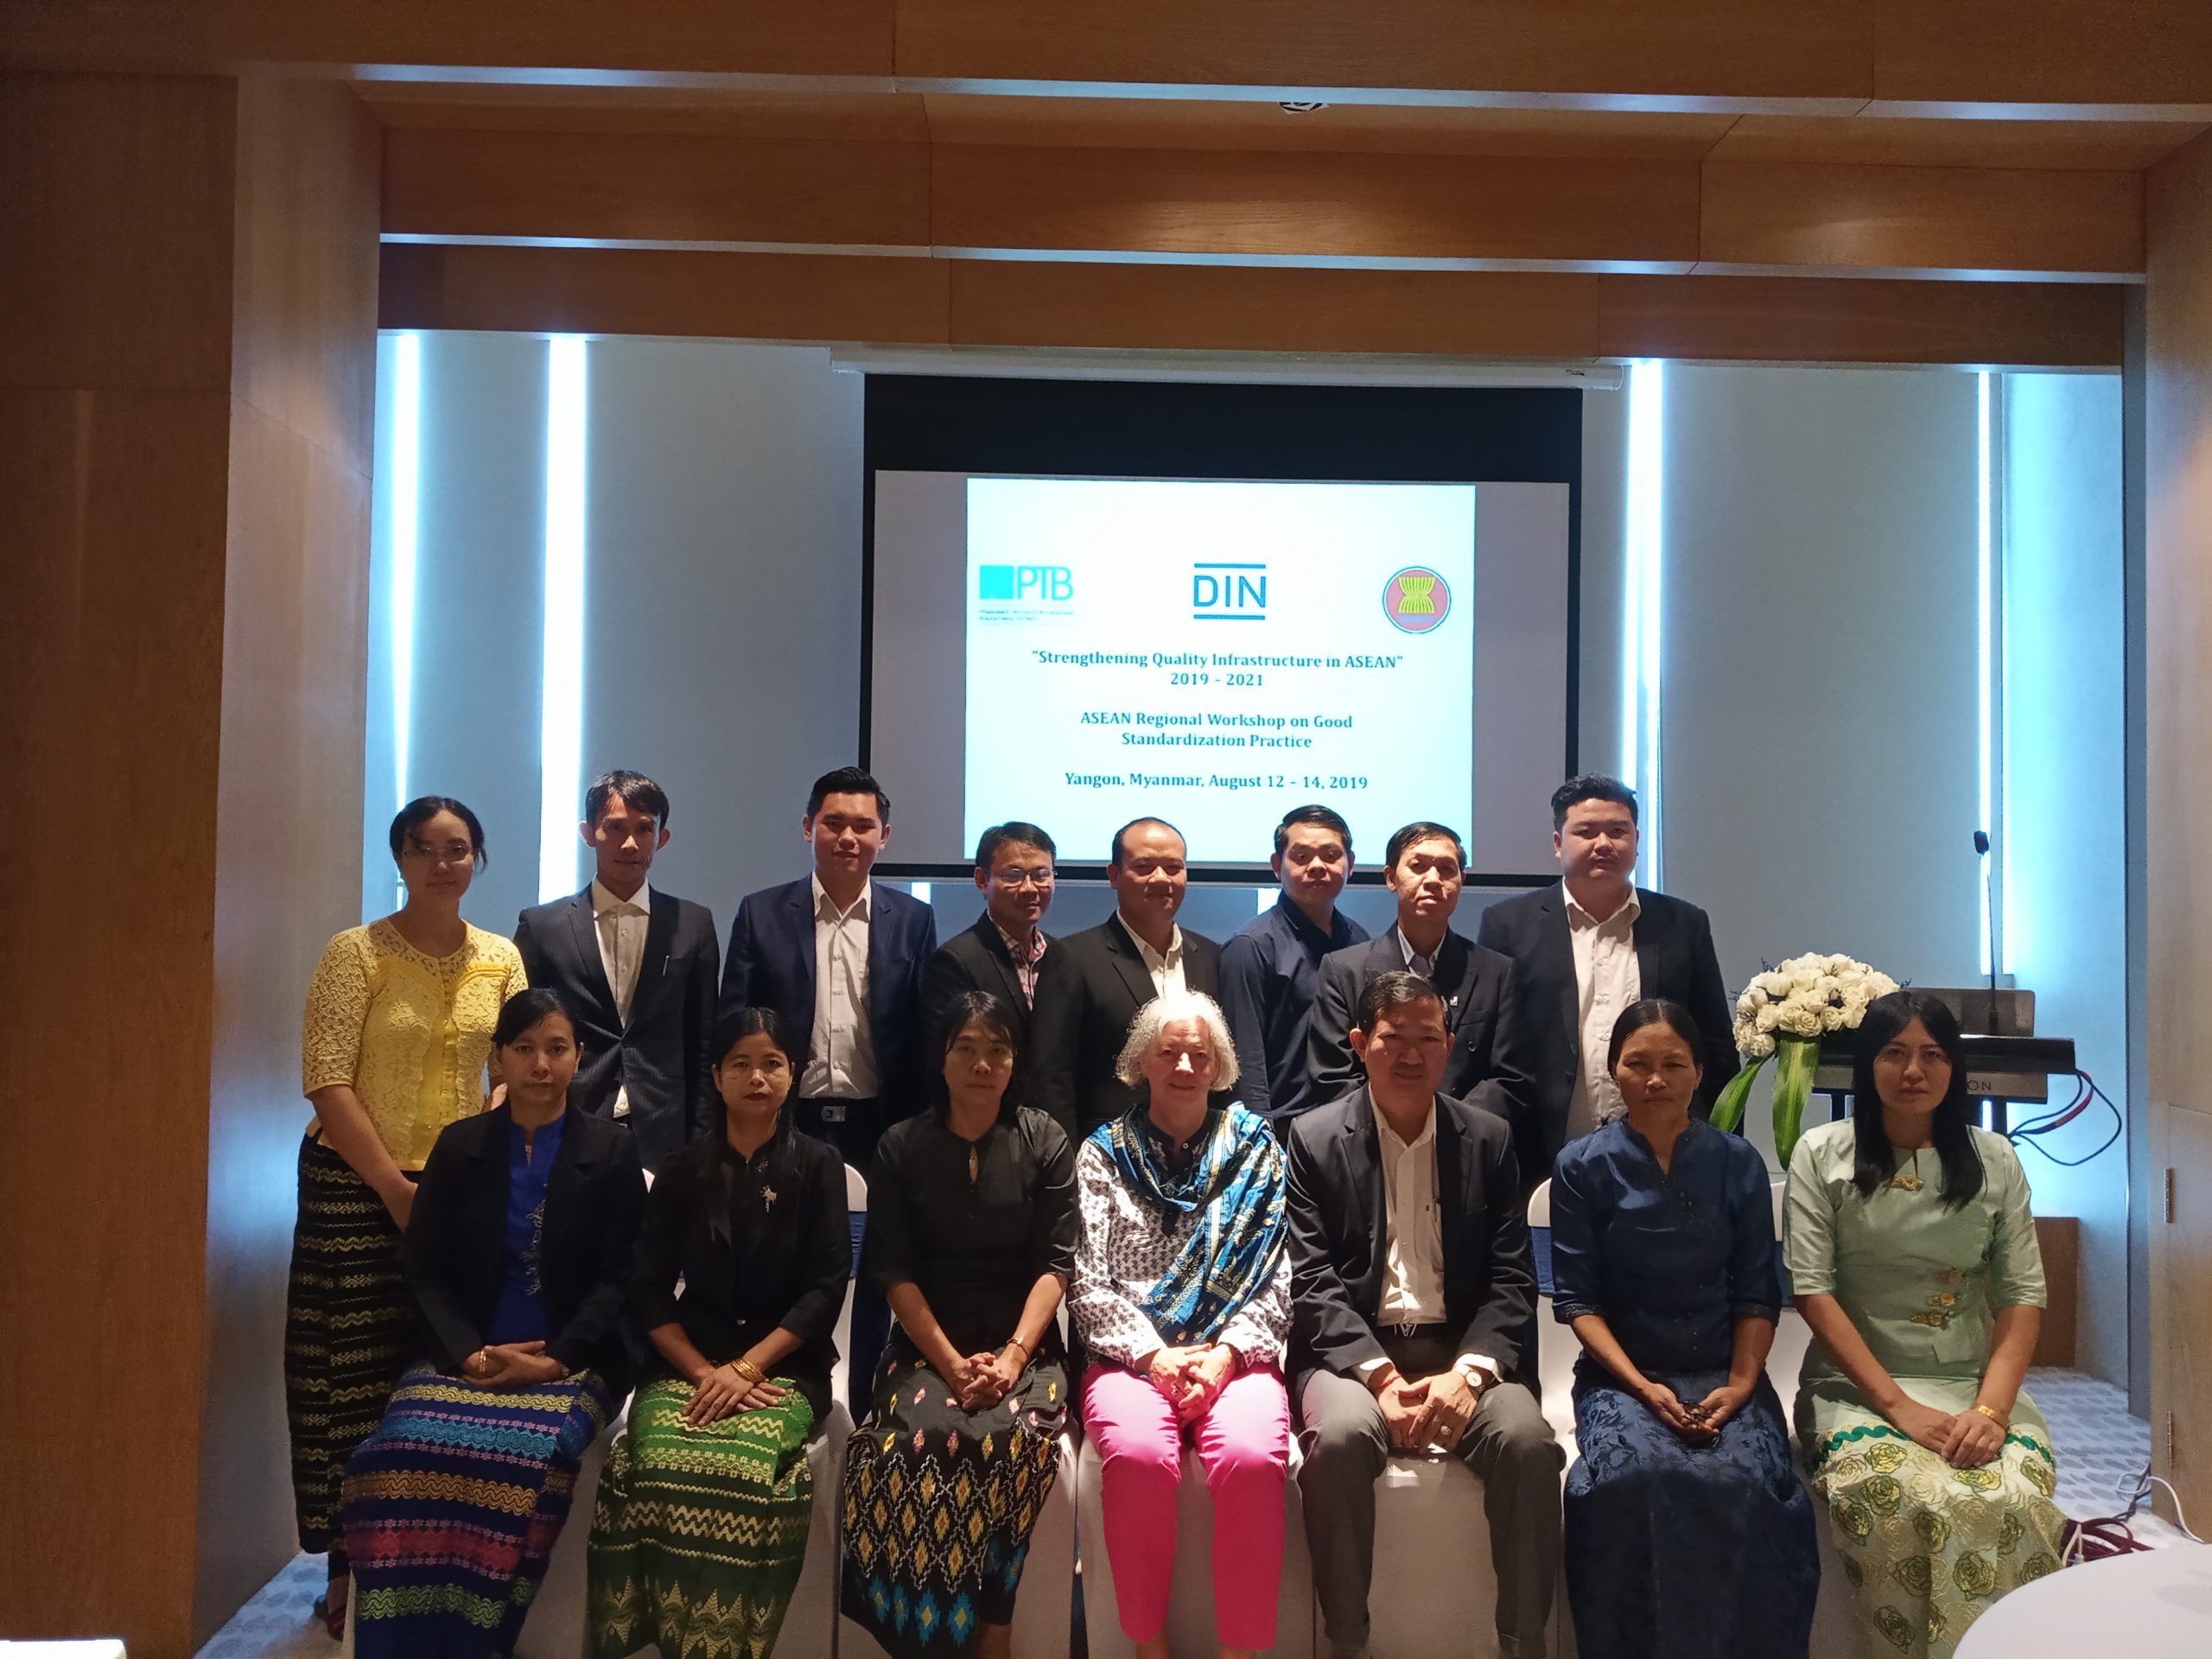 ASEAN Regional Workshop on Good Standardization Practices